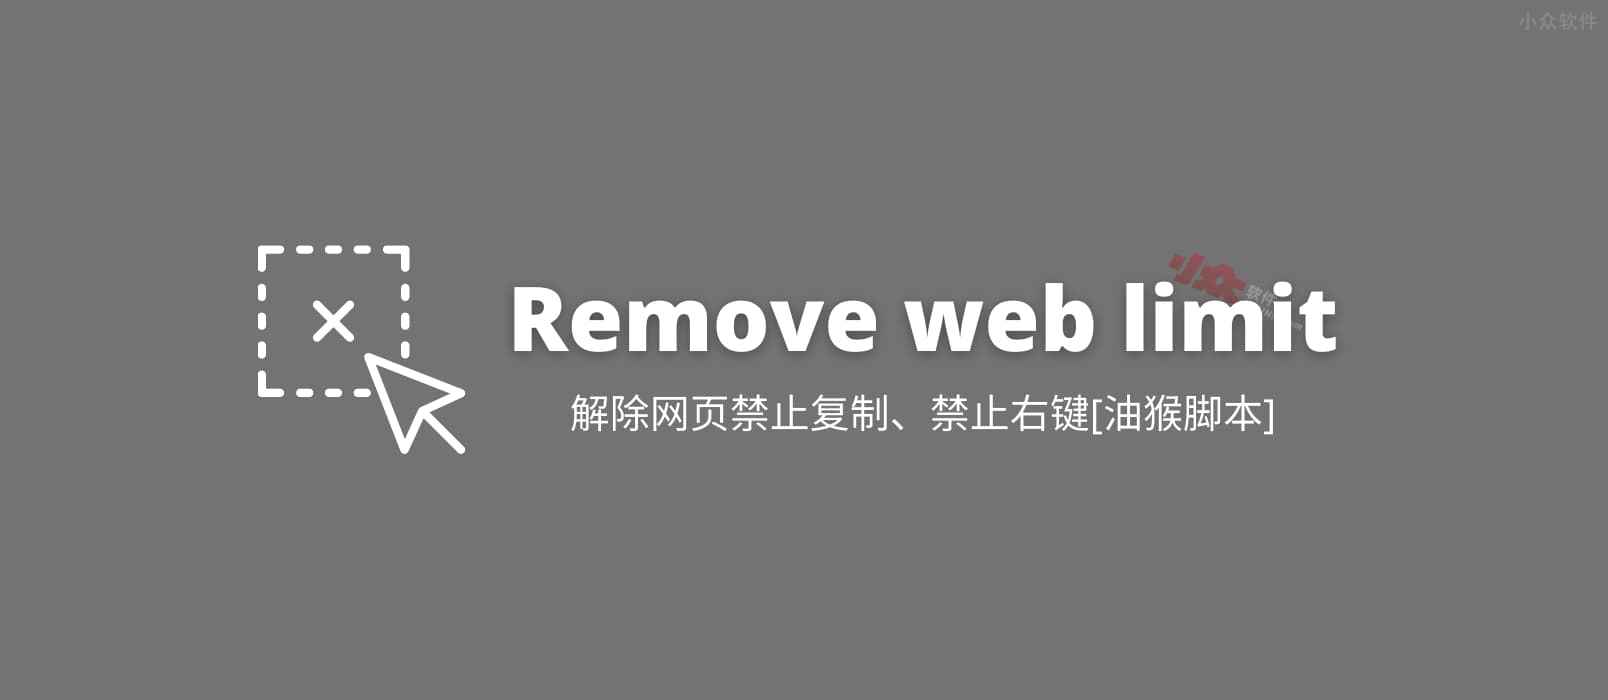 Remove web limits - 解除网页禁止复制限制、禁止右键限制[油猴脚本]